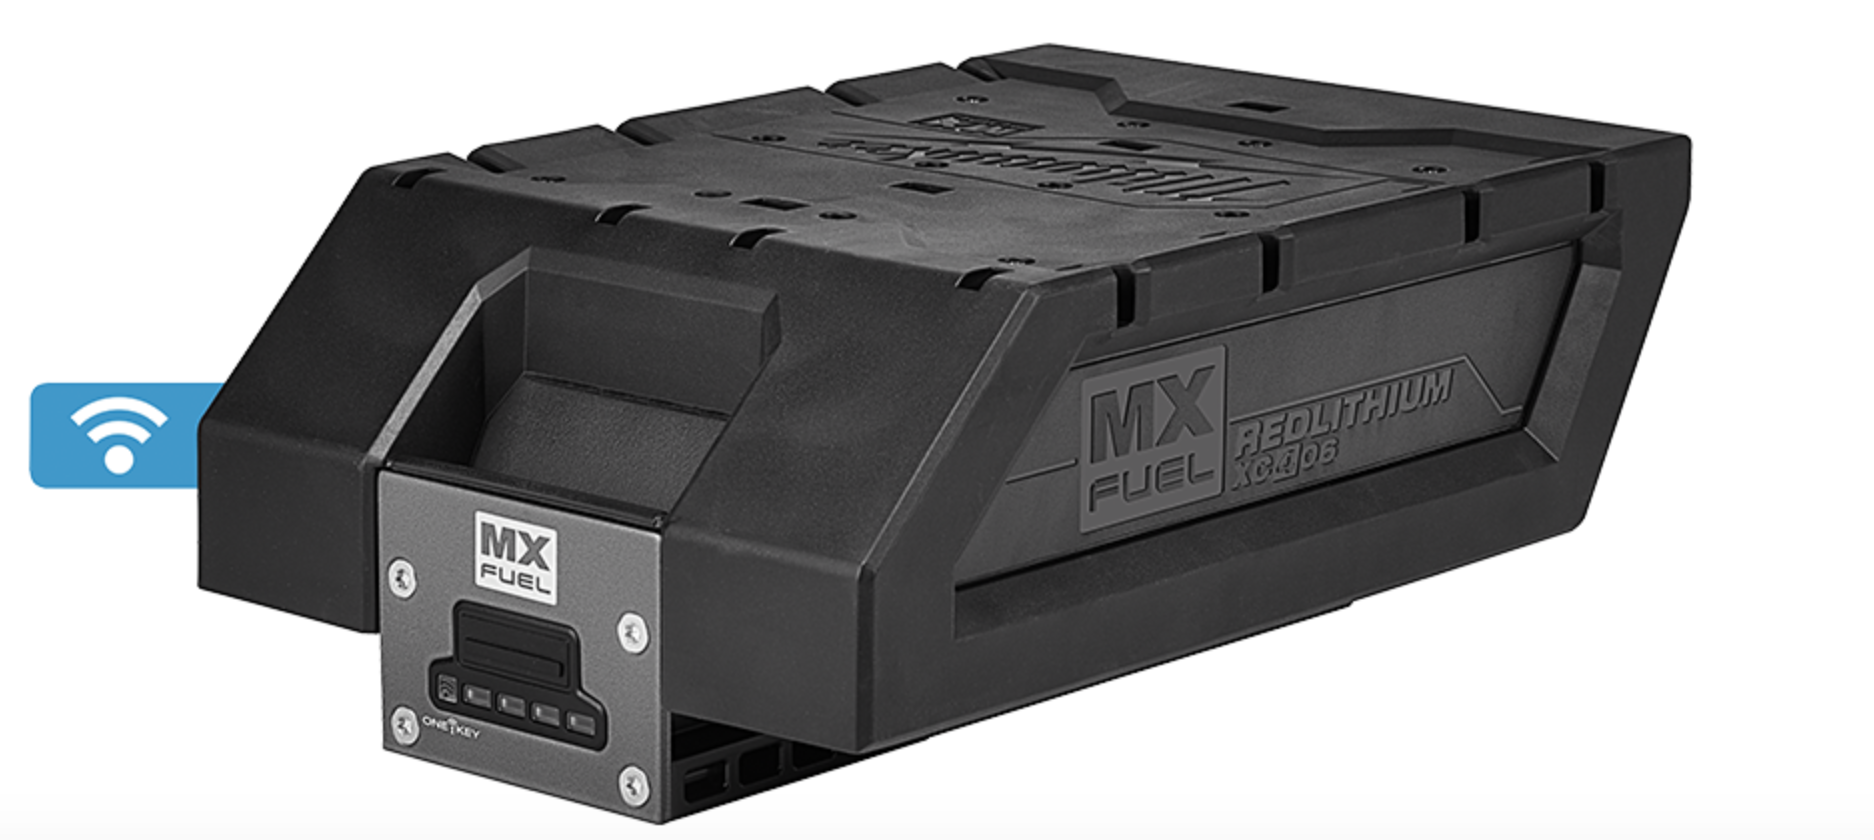 Milwaukee MX Fuel XC 406 battery